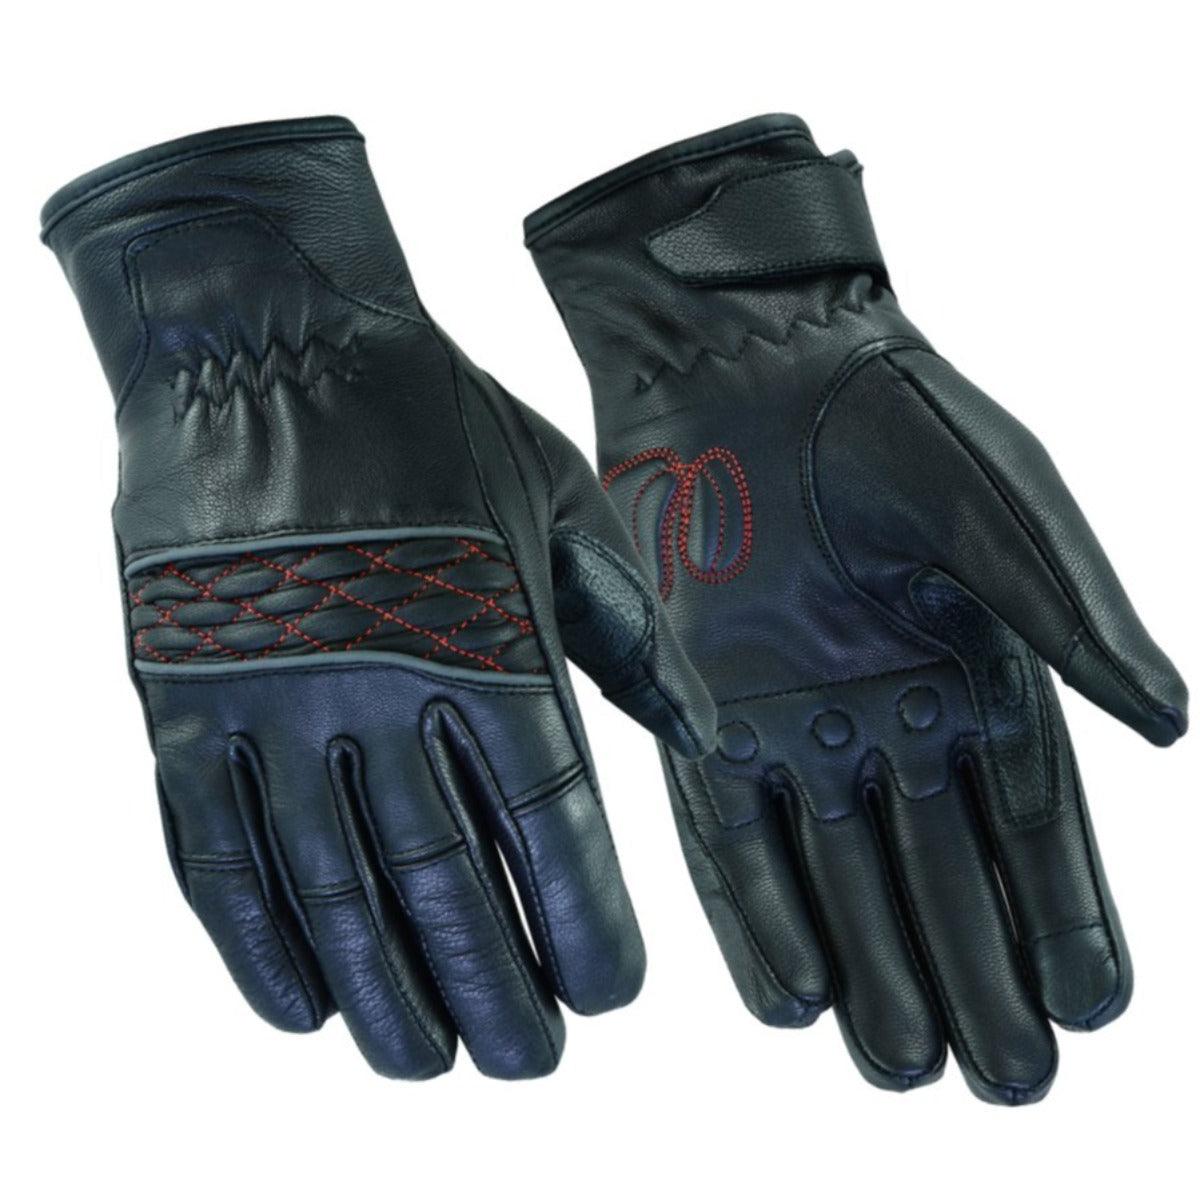 Daniel Smart Women's Cruiser Gloves, Black/Red - American Legend Rider